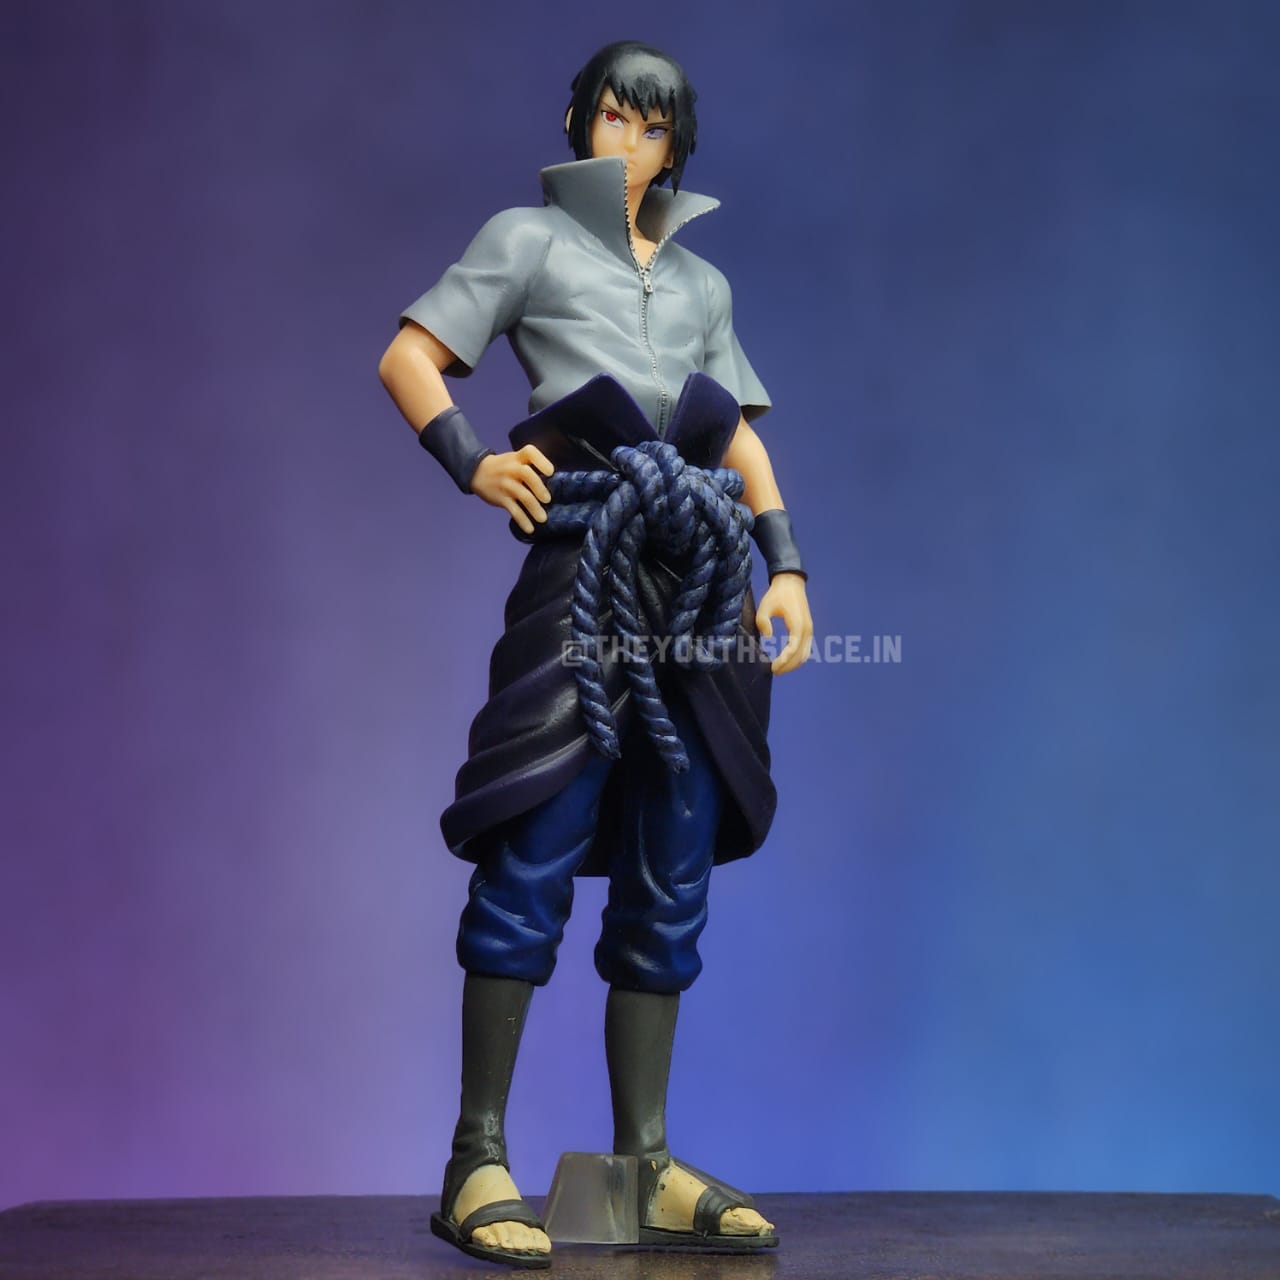 Sasuke Standing Pose Action Figure - Naruto